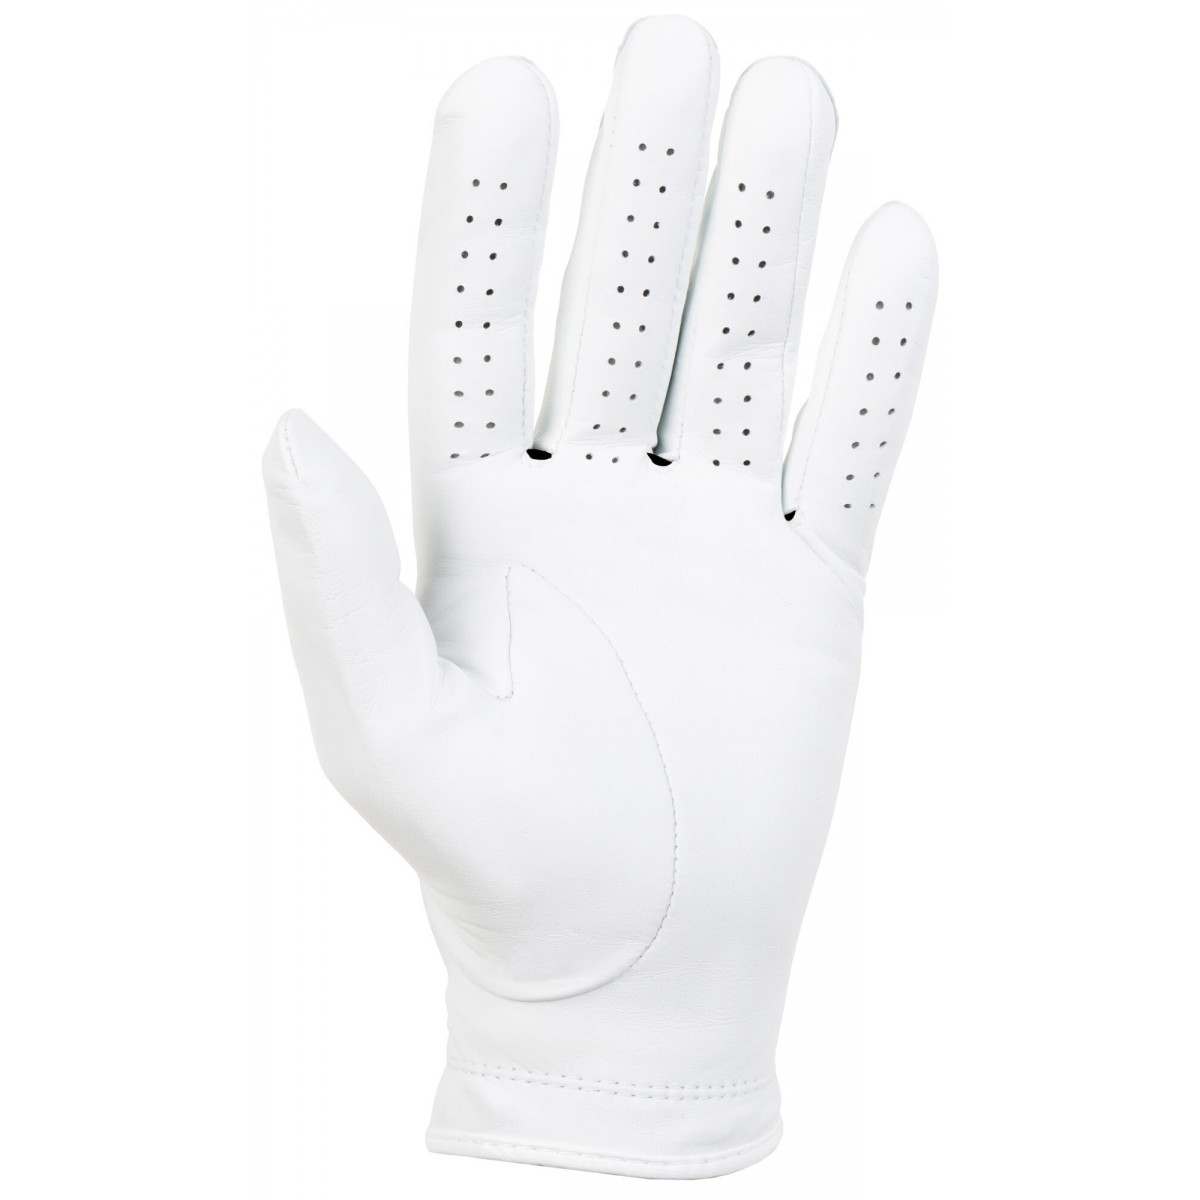 Titleist 2020 Perma-Soft Golf Glove - Left Hand Regular